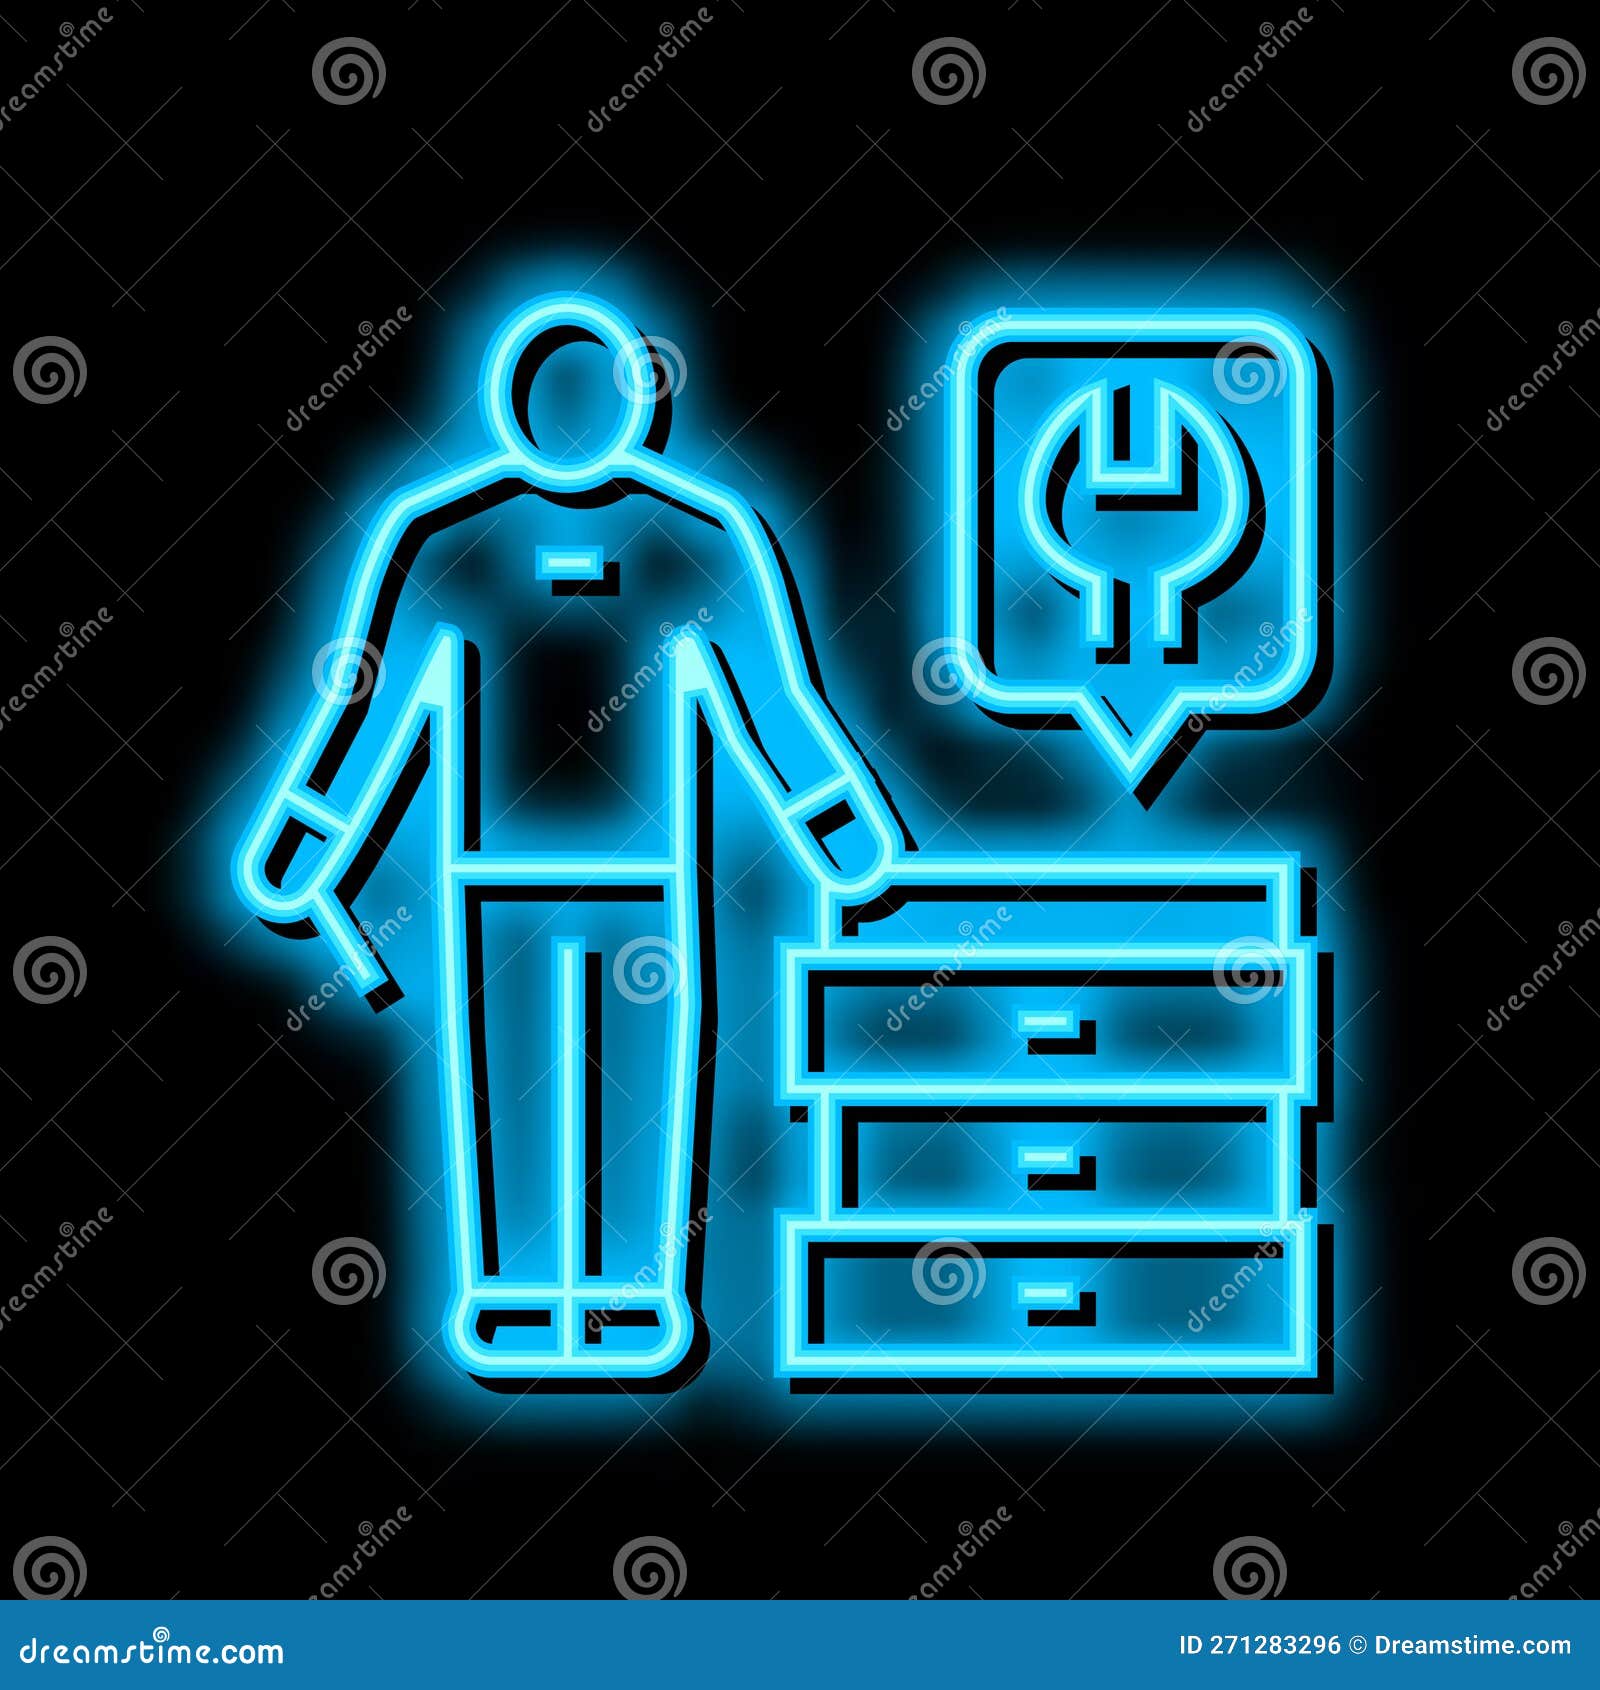 Furniture Assembler Neon Glow Icon Illustration Stock Vector ...